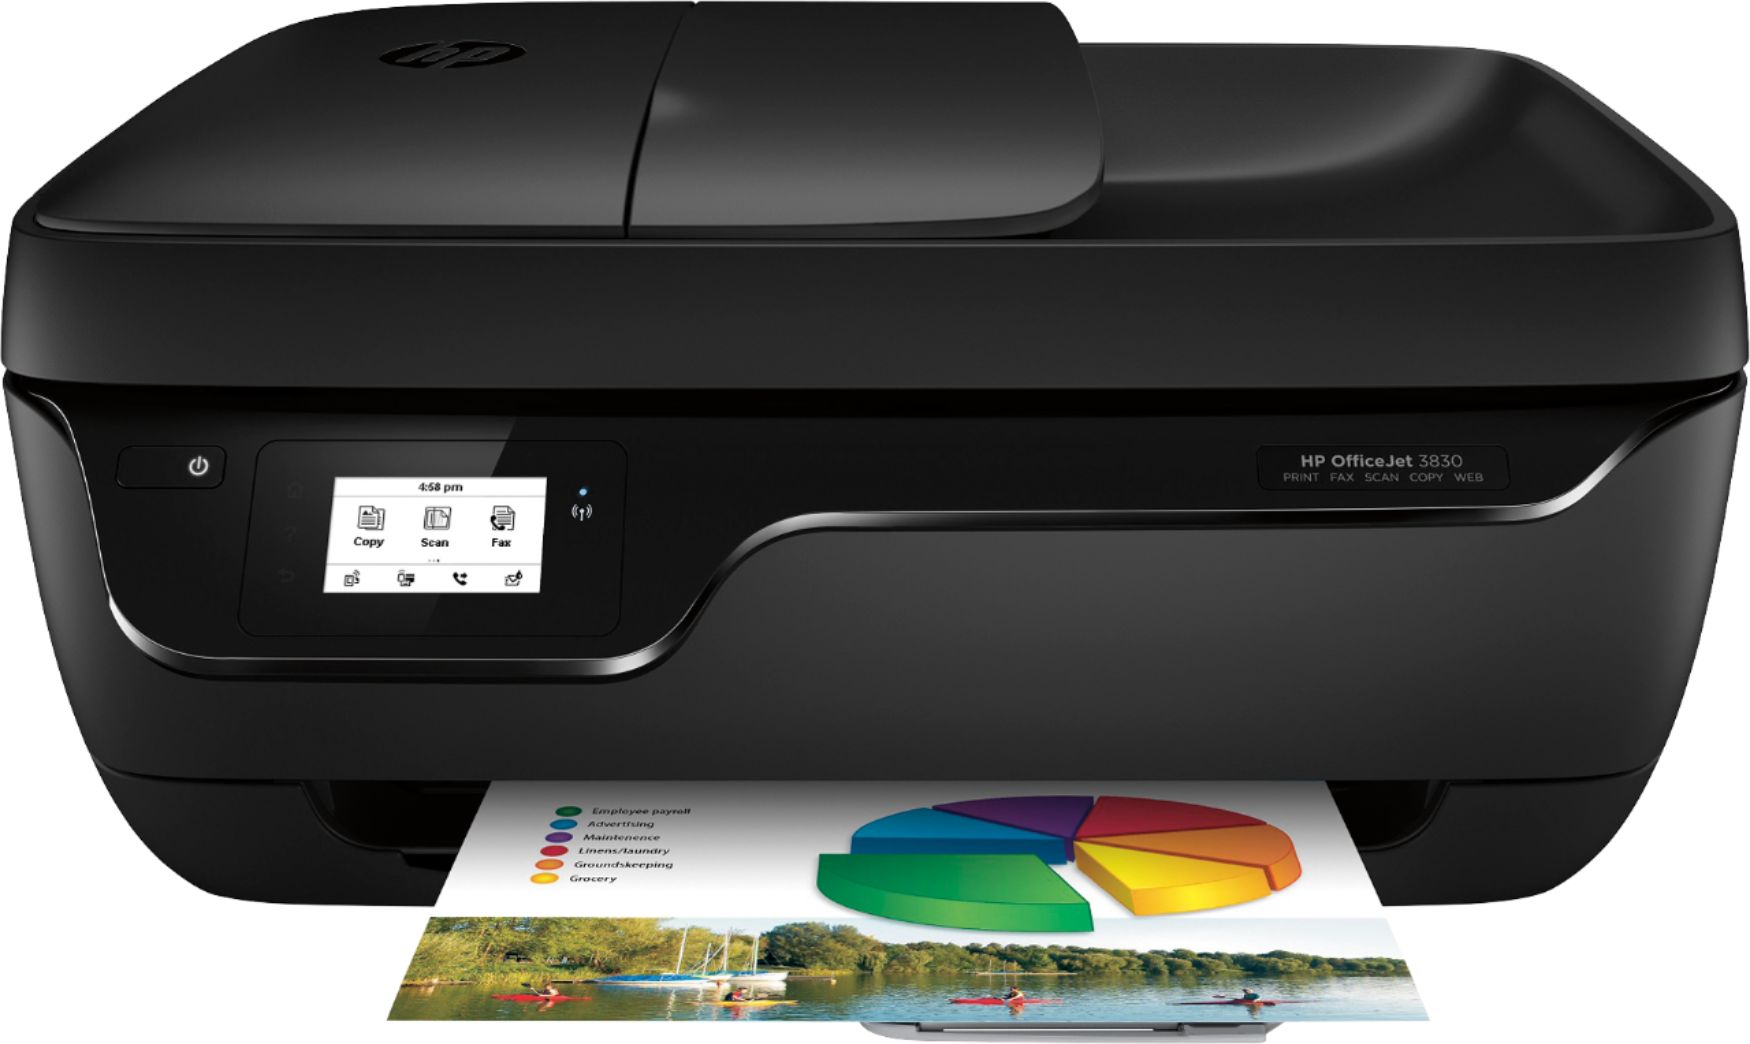 HP OfficeJet 3830 Wireless All-In-One Instant Inkjet Printer Black K7V40A#B1H - Best Buy